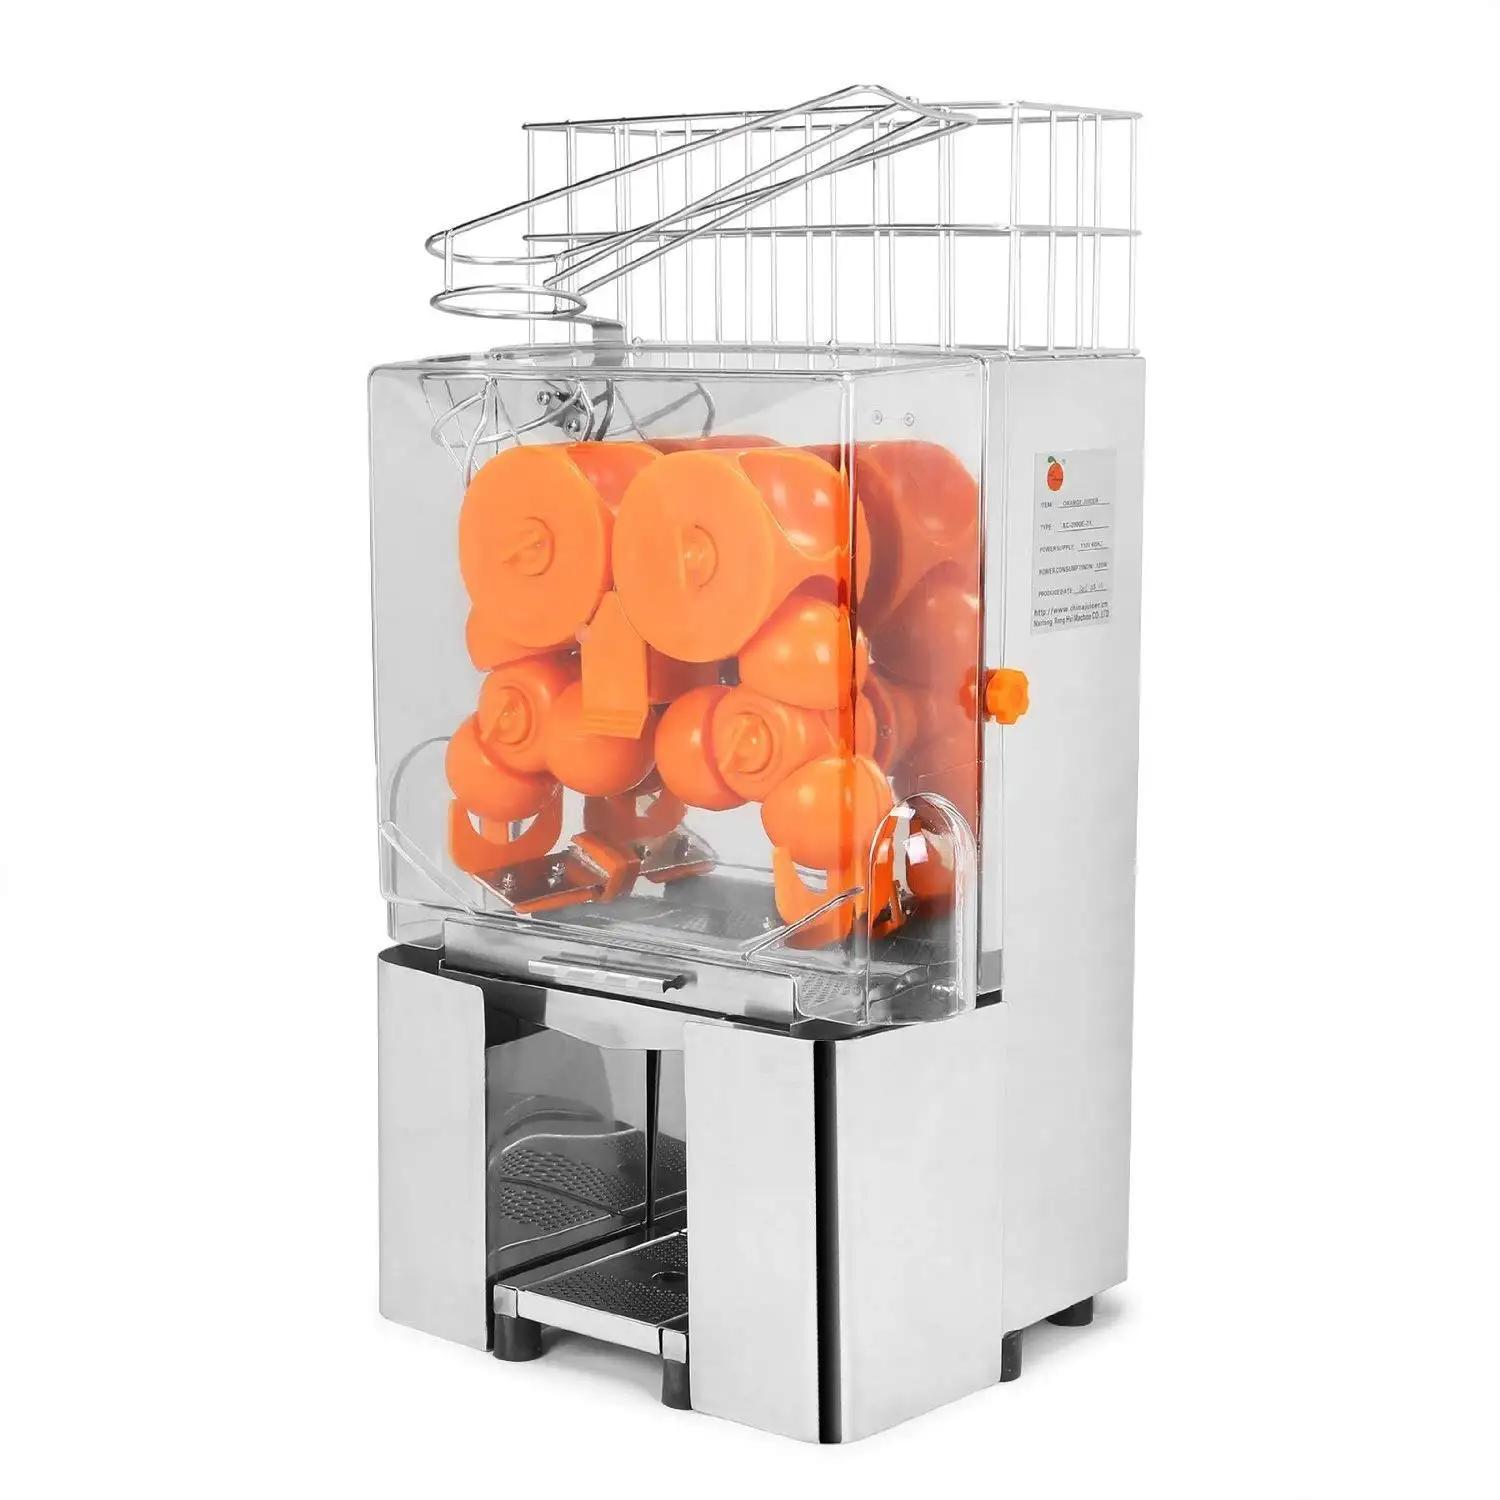 110-240v Pure natural fresh juice squeezer machine for orange lemon pomegranate pineapple